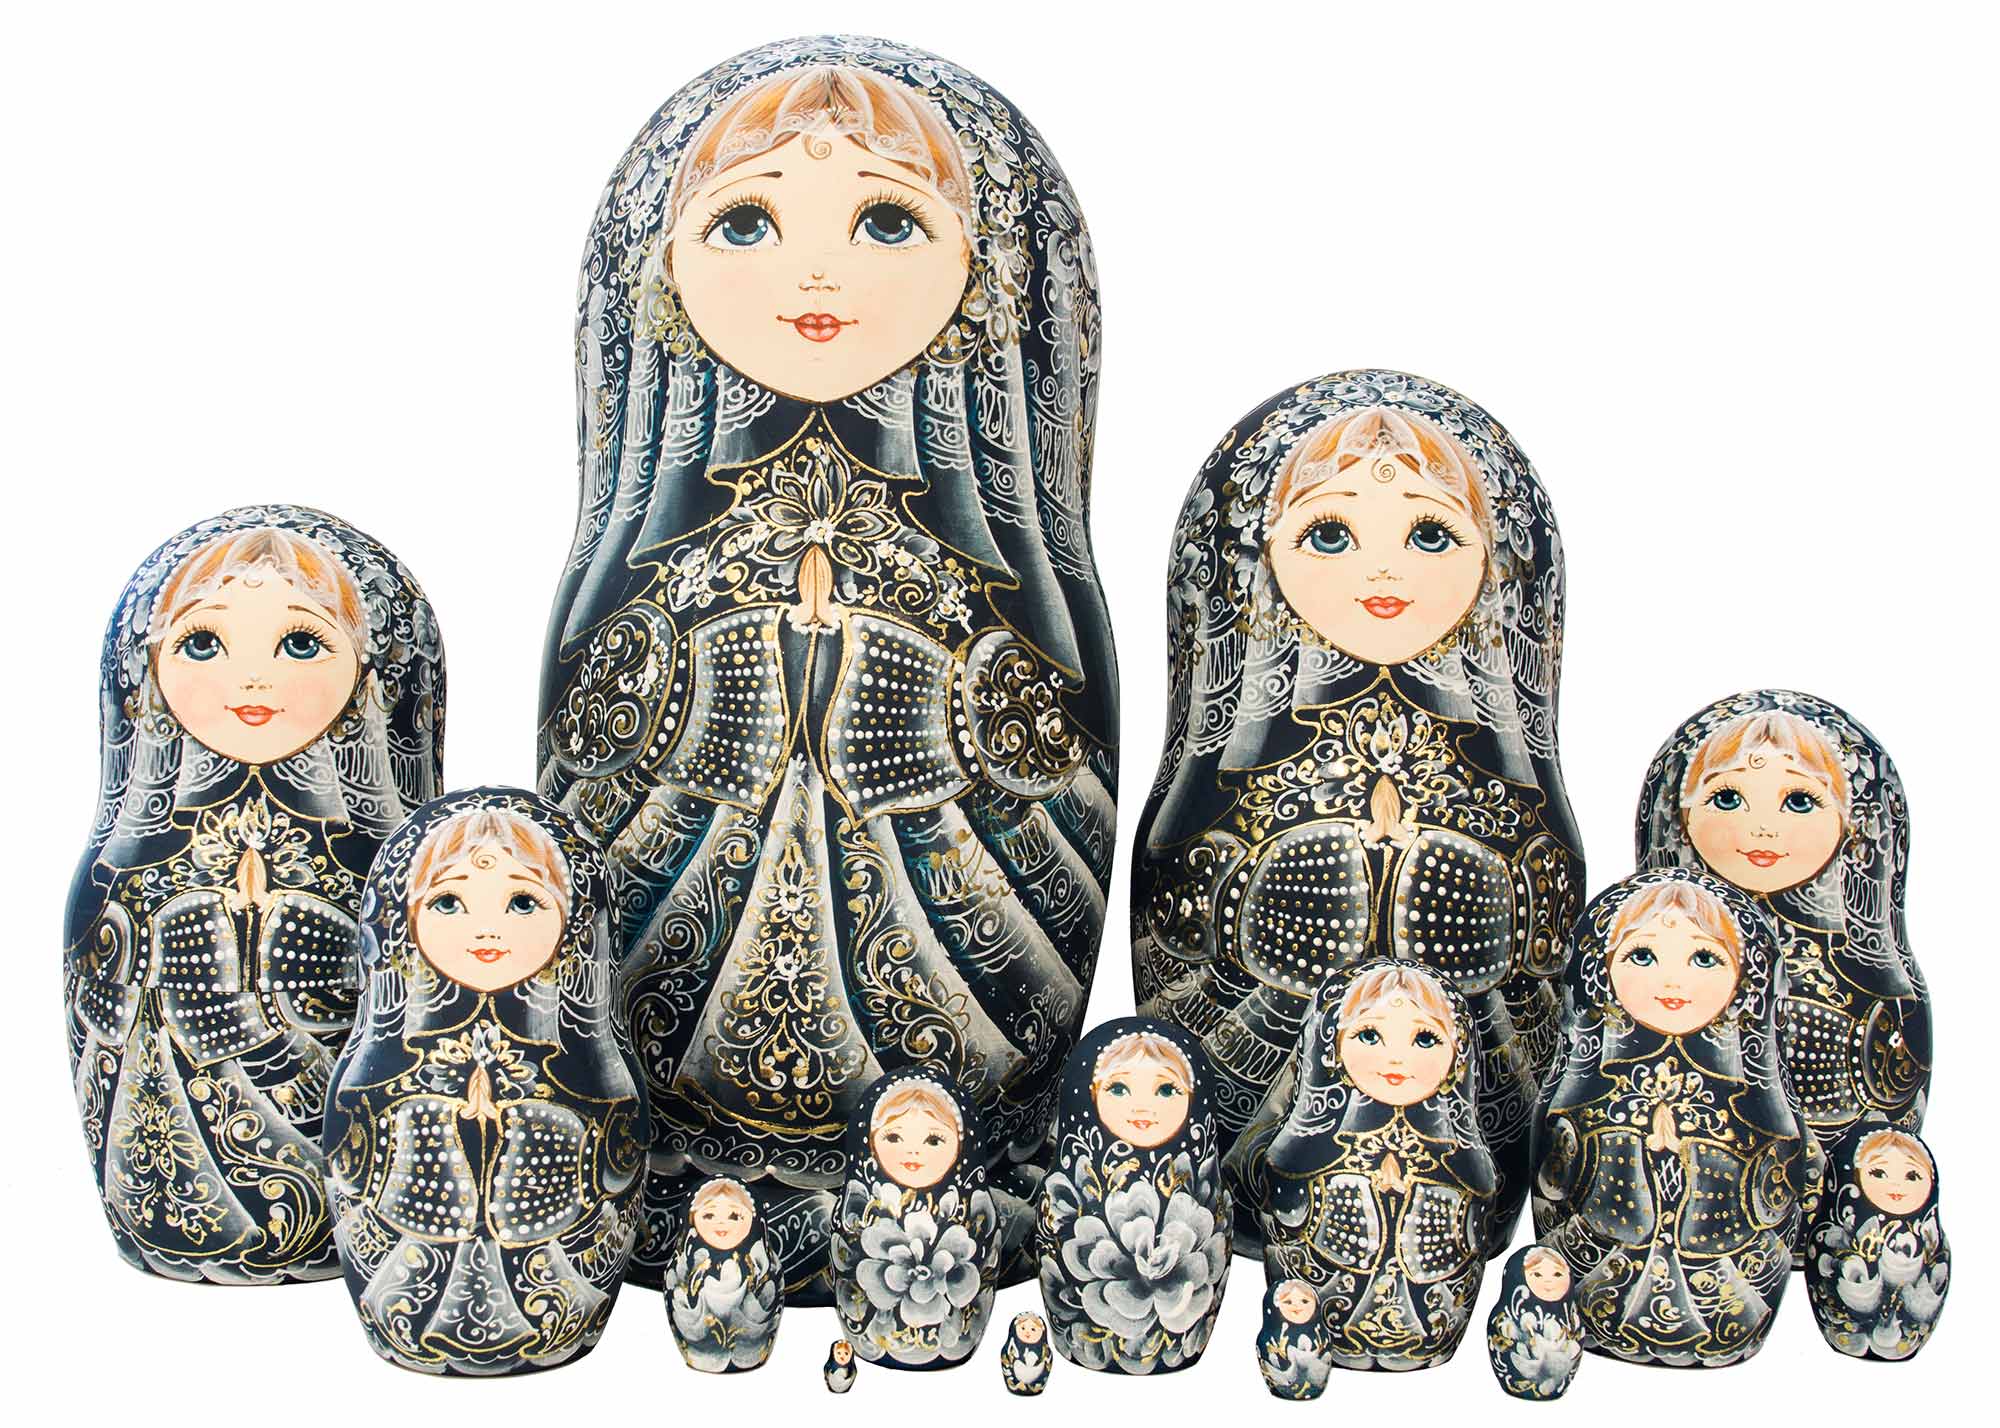 Buy Golden Lace Nesting Doll 15pc./12" at GoldenCockerel.com